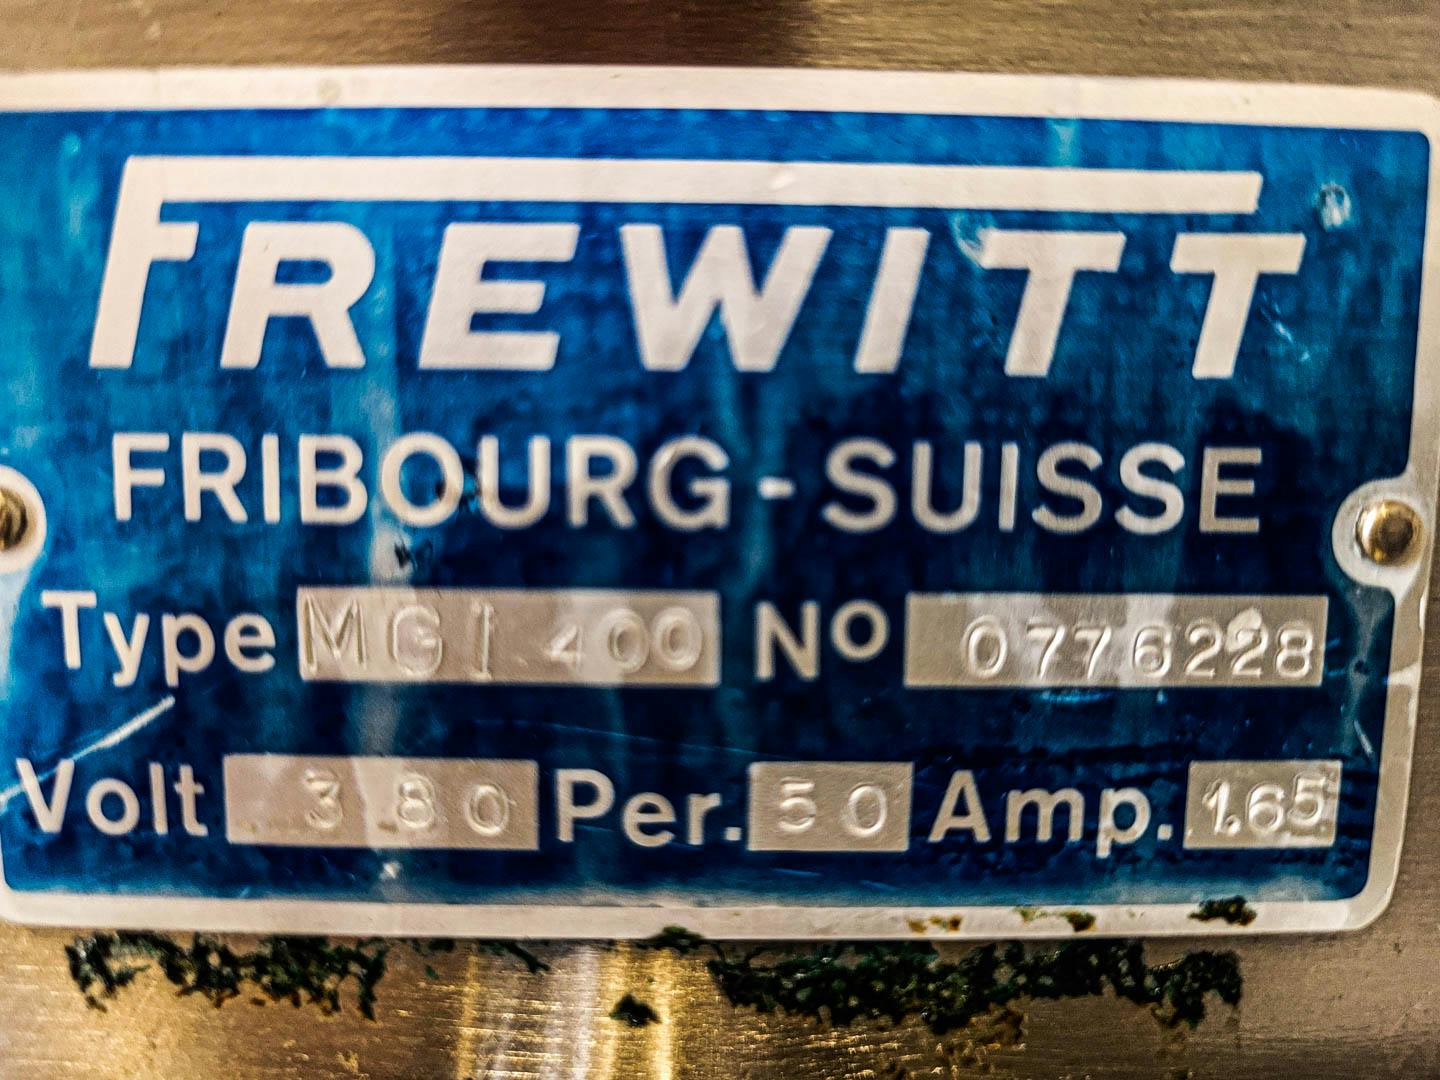 Frewitt Fribourg MGI400 - Sieve granulator - image 7